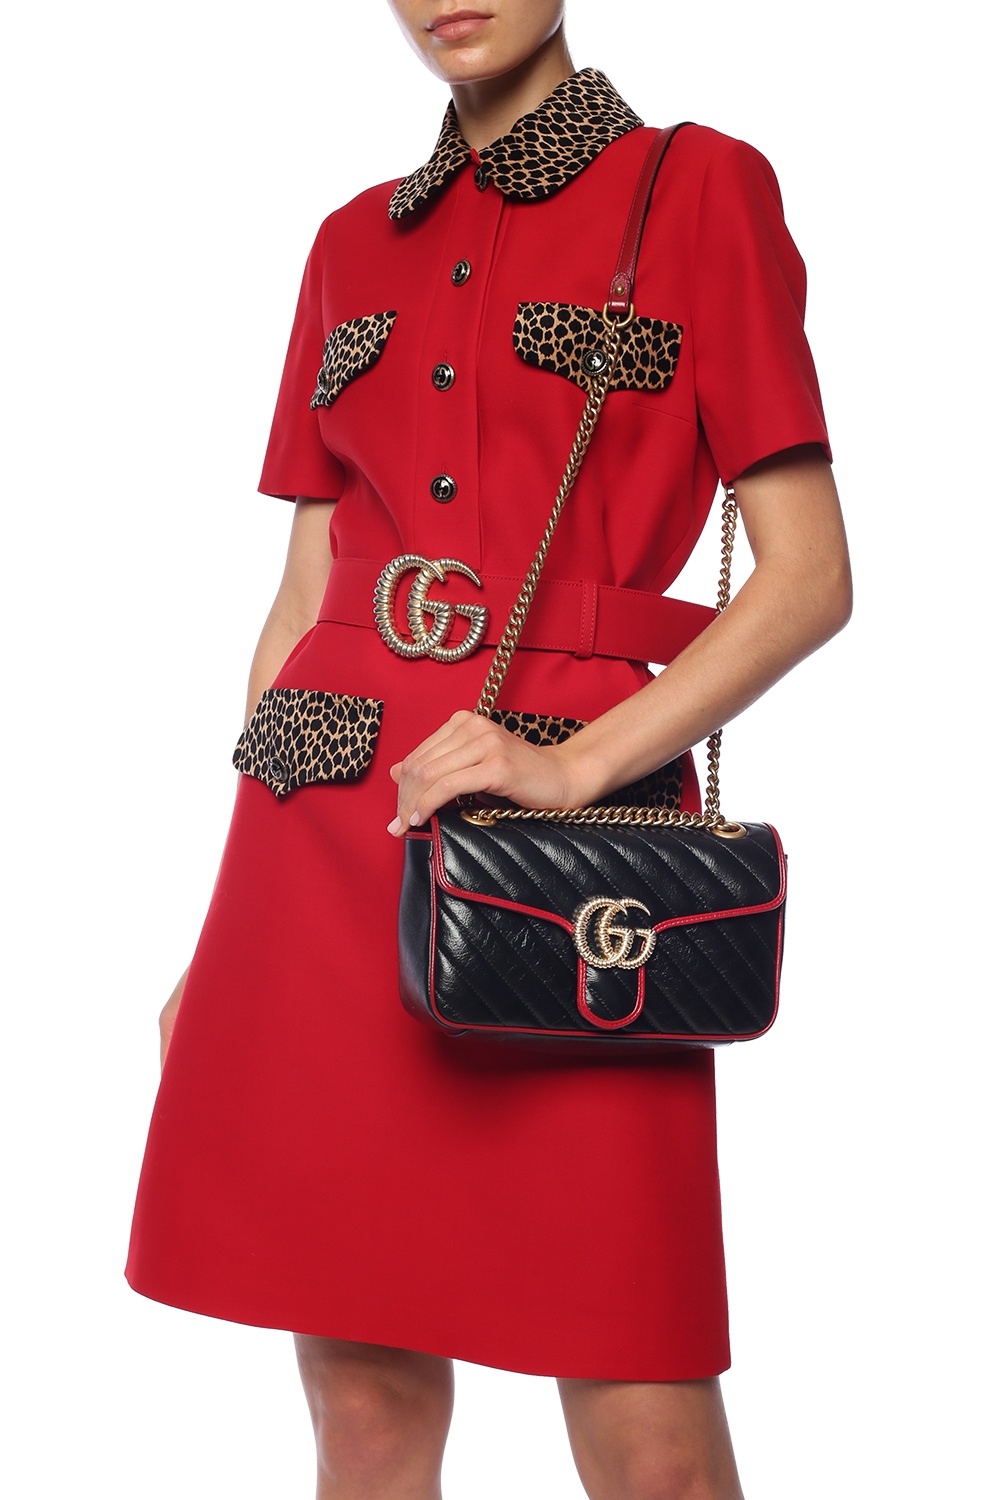 GG Marmont' shoulder bag Gucci - Vitkac US